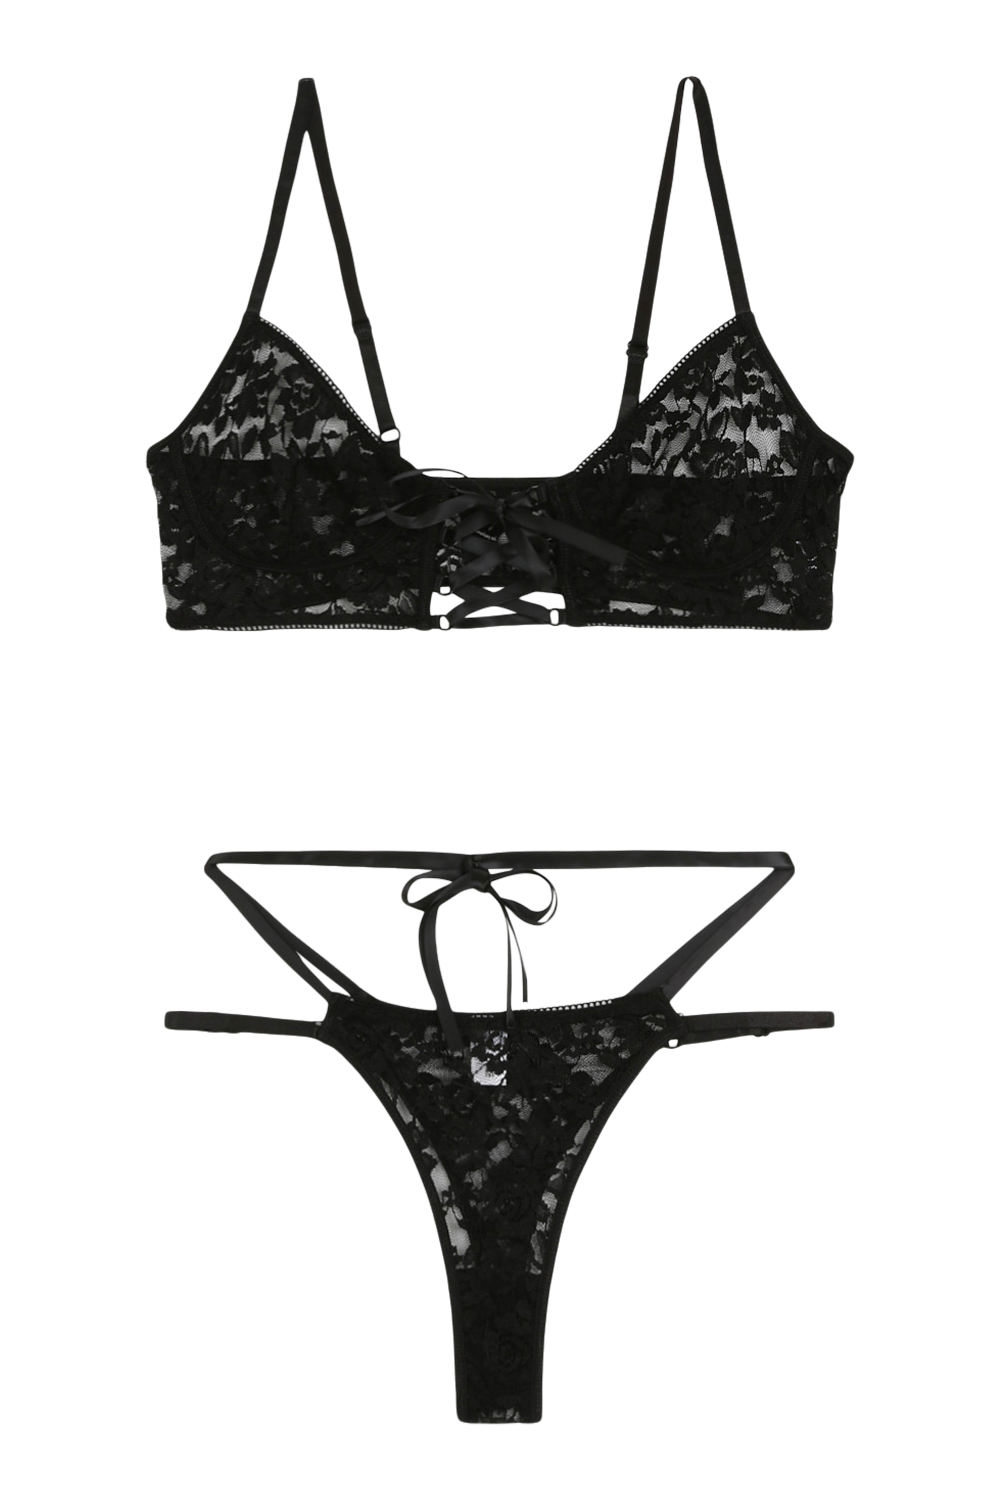 https://media.boohoo.com/i/boohoo/gzz02504_black_xl_4/female-black-lace-up-lingerie-set